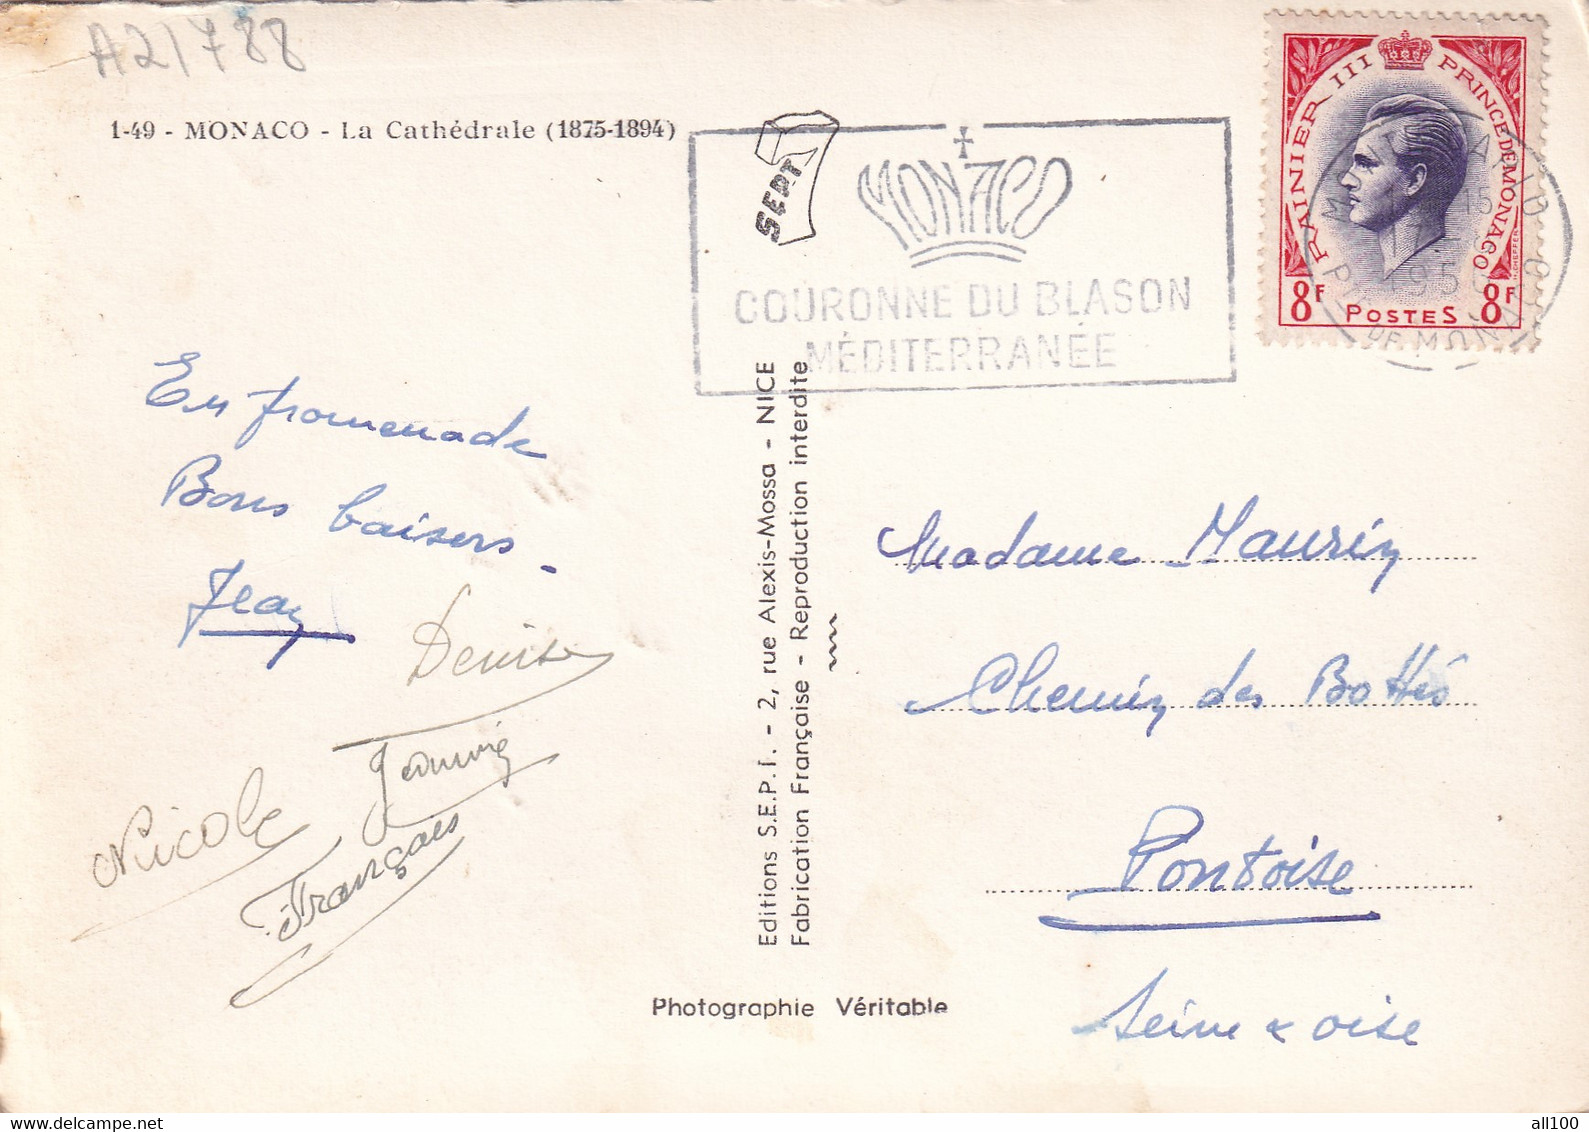 A21788 - MONACO Saint Nicholas Cathedral Post Card Used 1956 Stamp Rainier III Prince De Monaco Sent To France - Saint Nicholas Cathedral